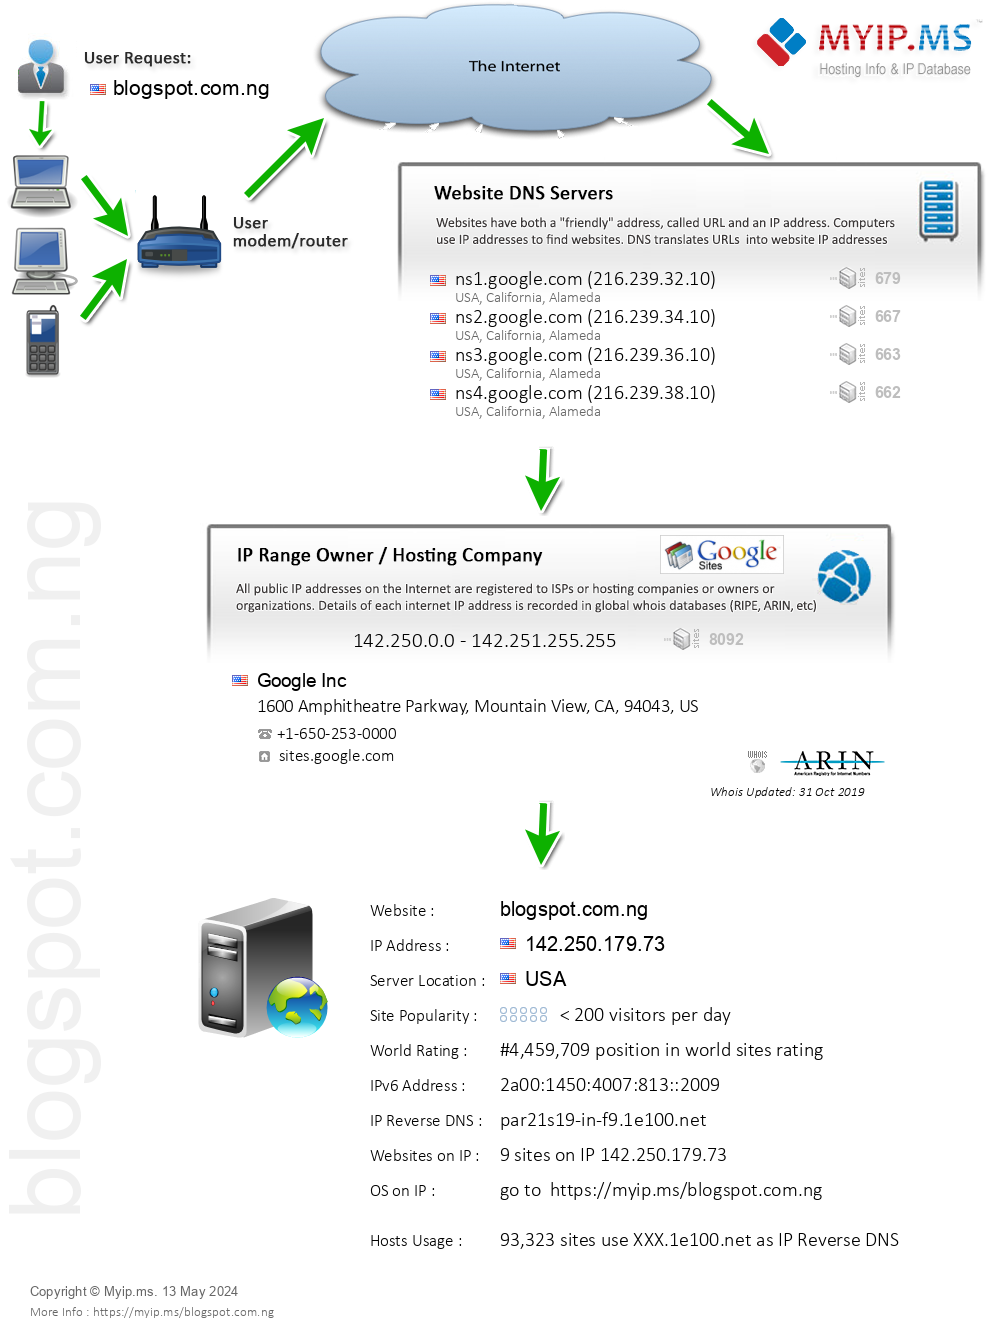 Blogspot.com.ng - Website Hosting Visual IP Diagram